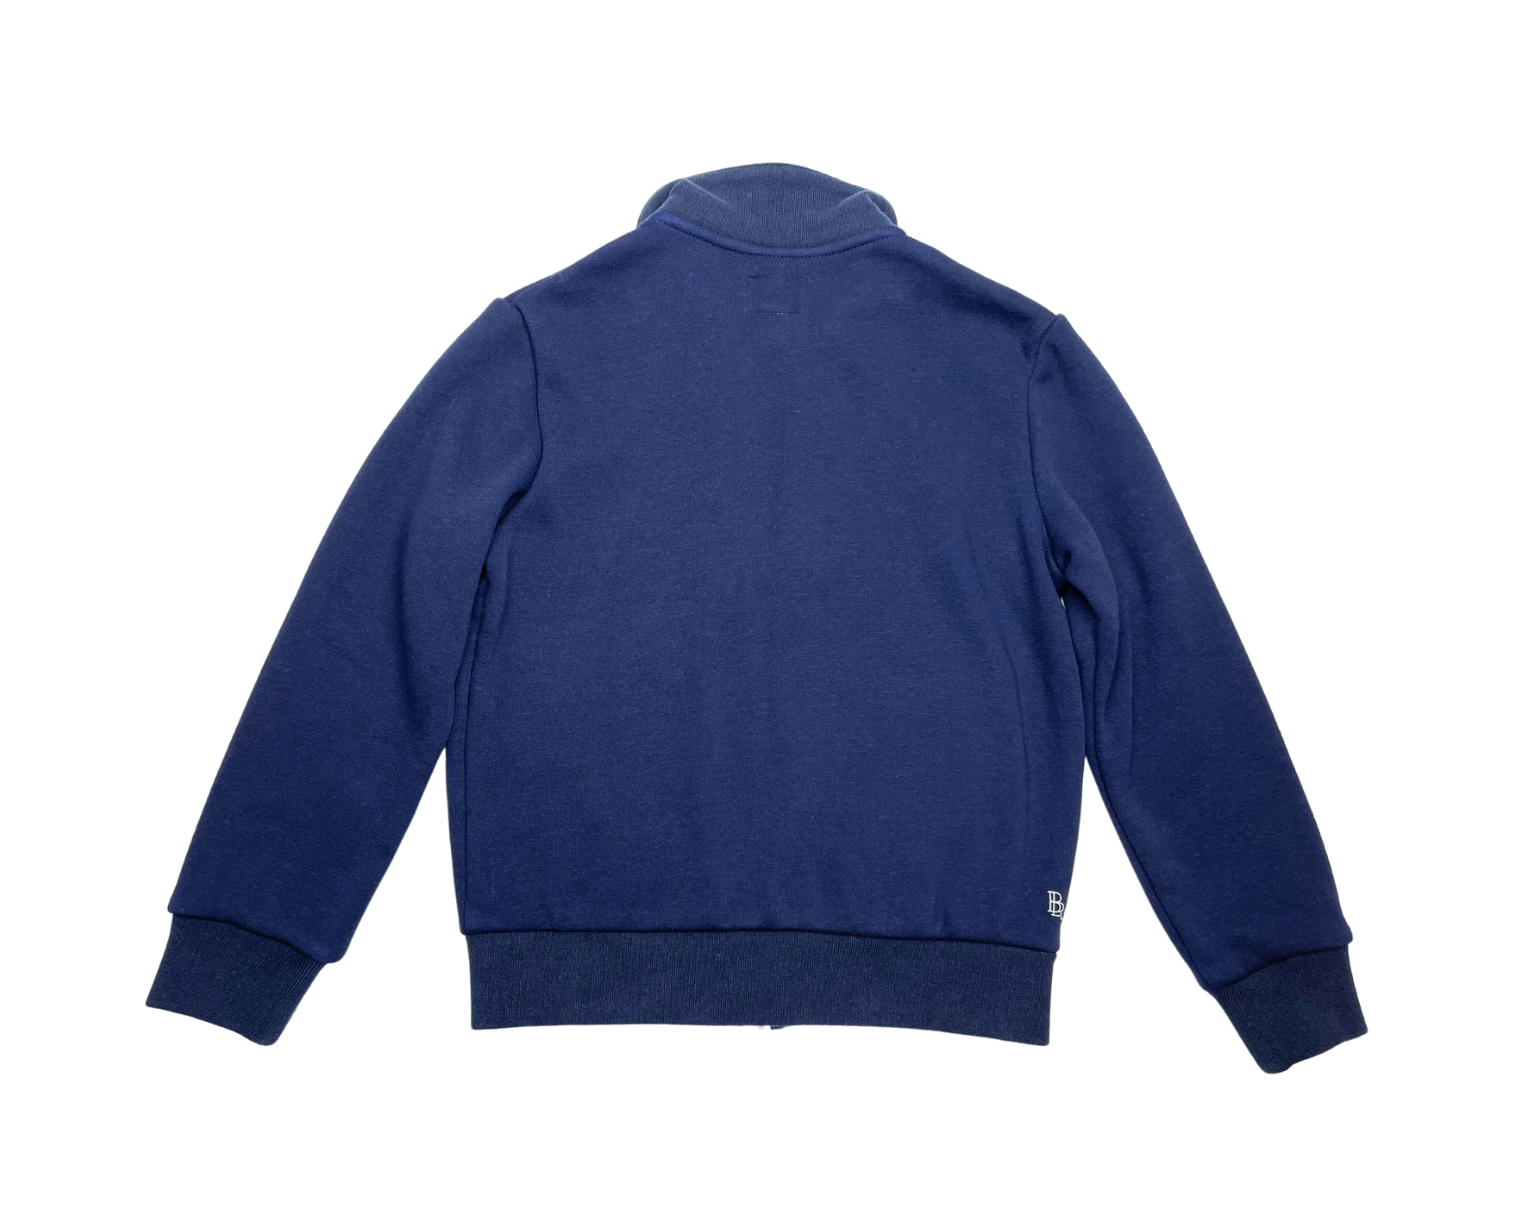 BELLEROSE - Veste bleue marine zippée - 8 ans